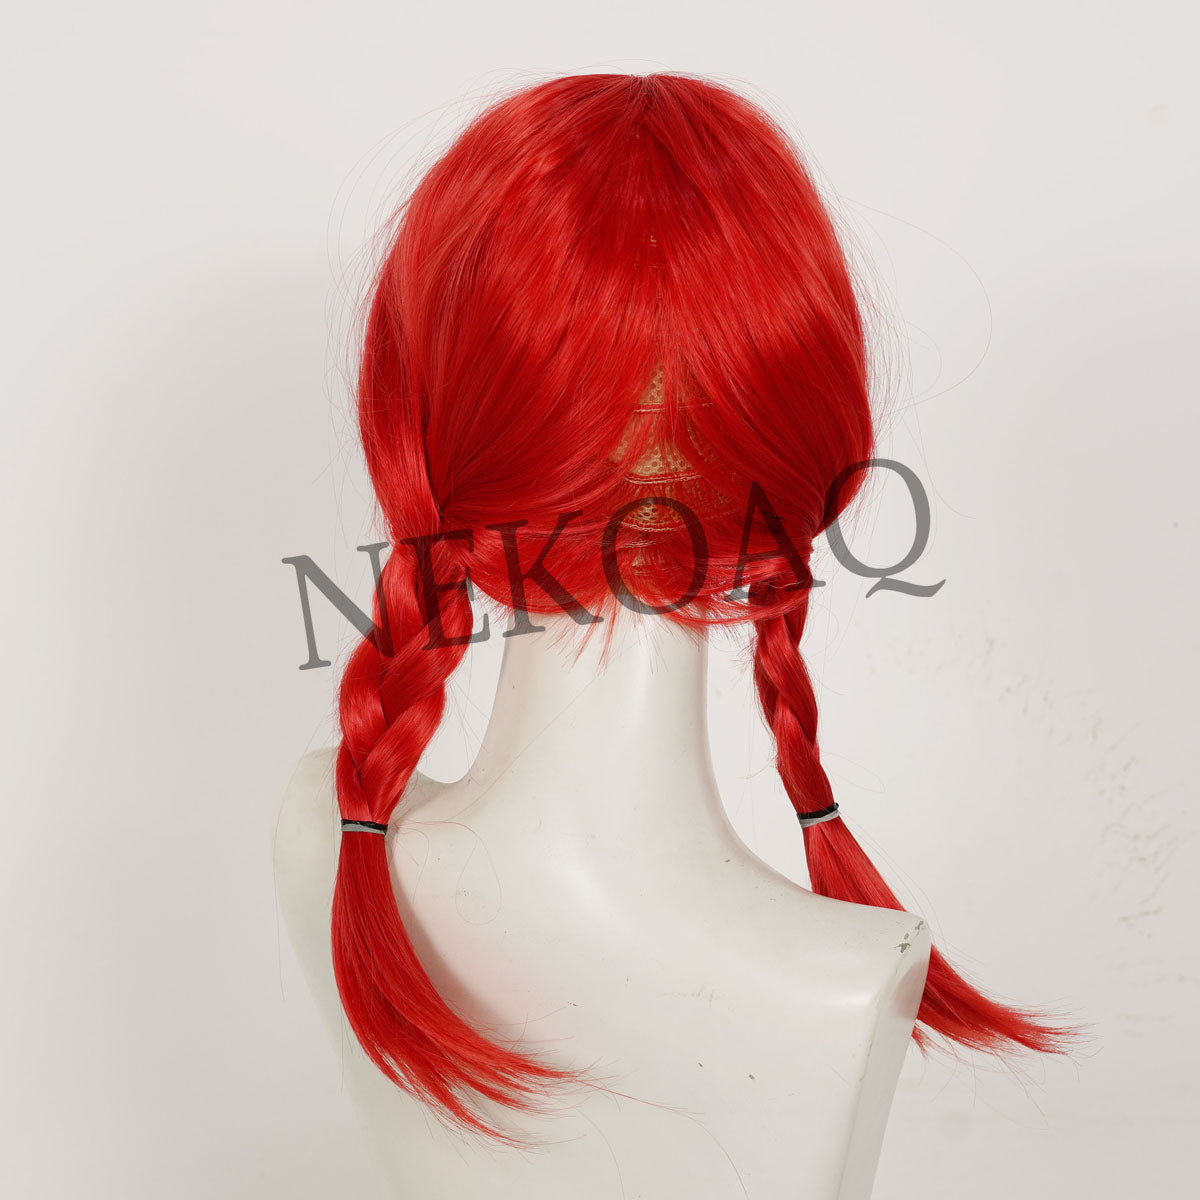 Red Pippi Longstocking Wig